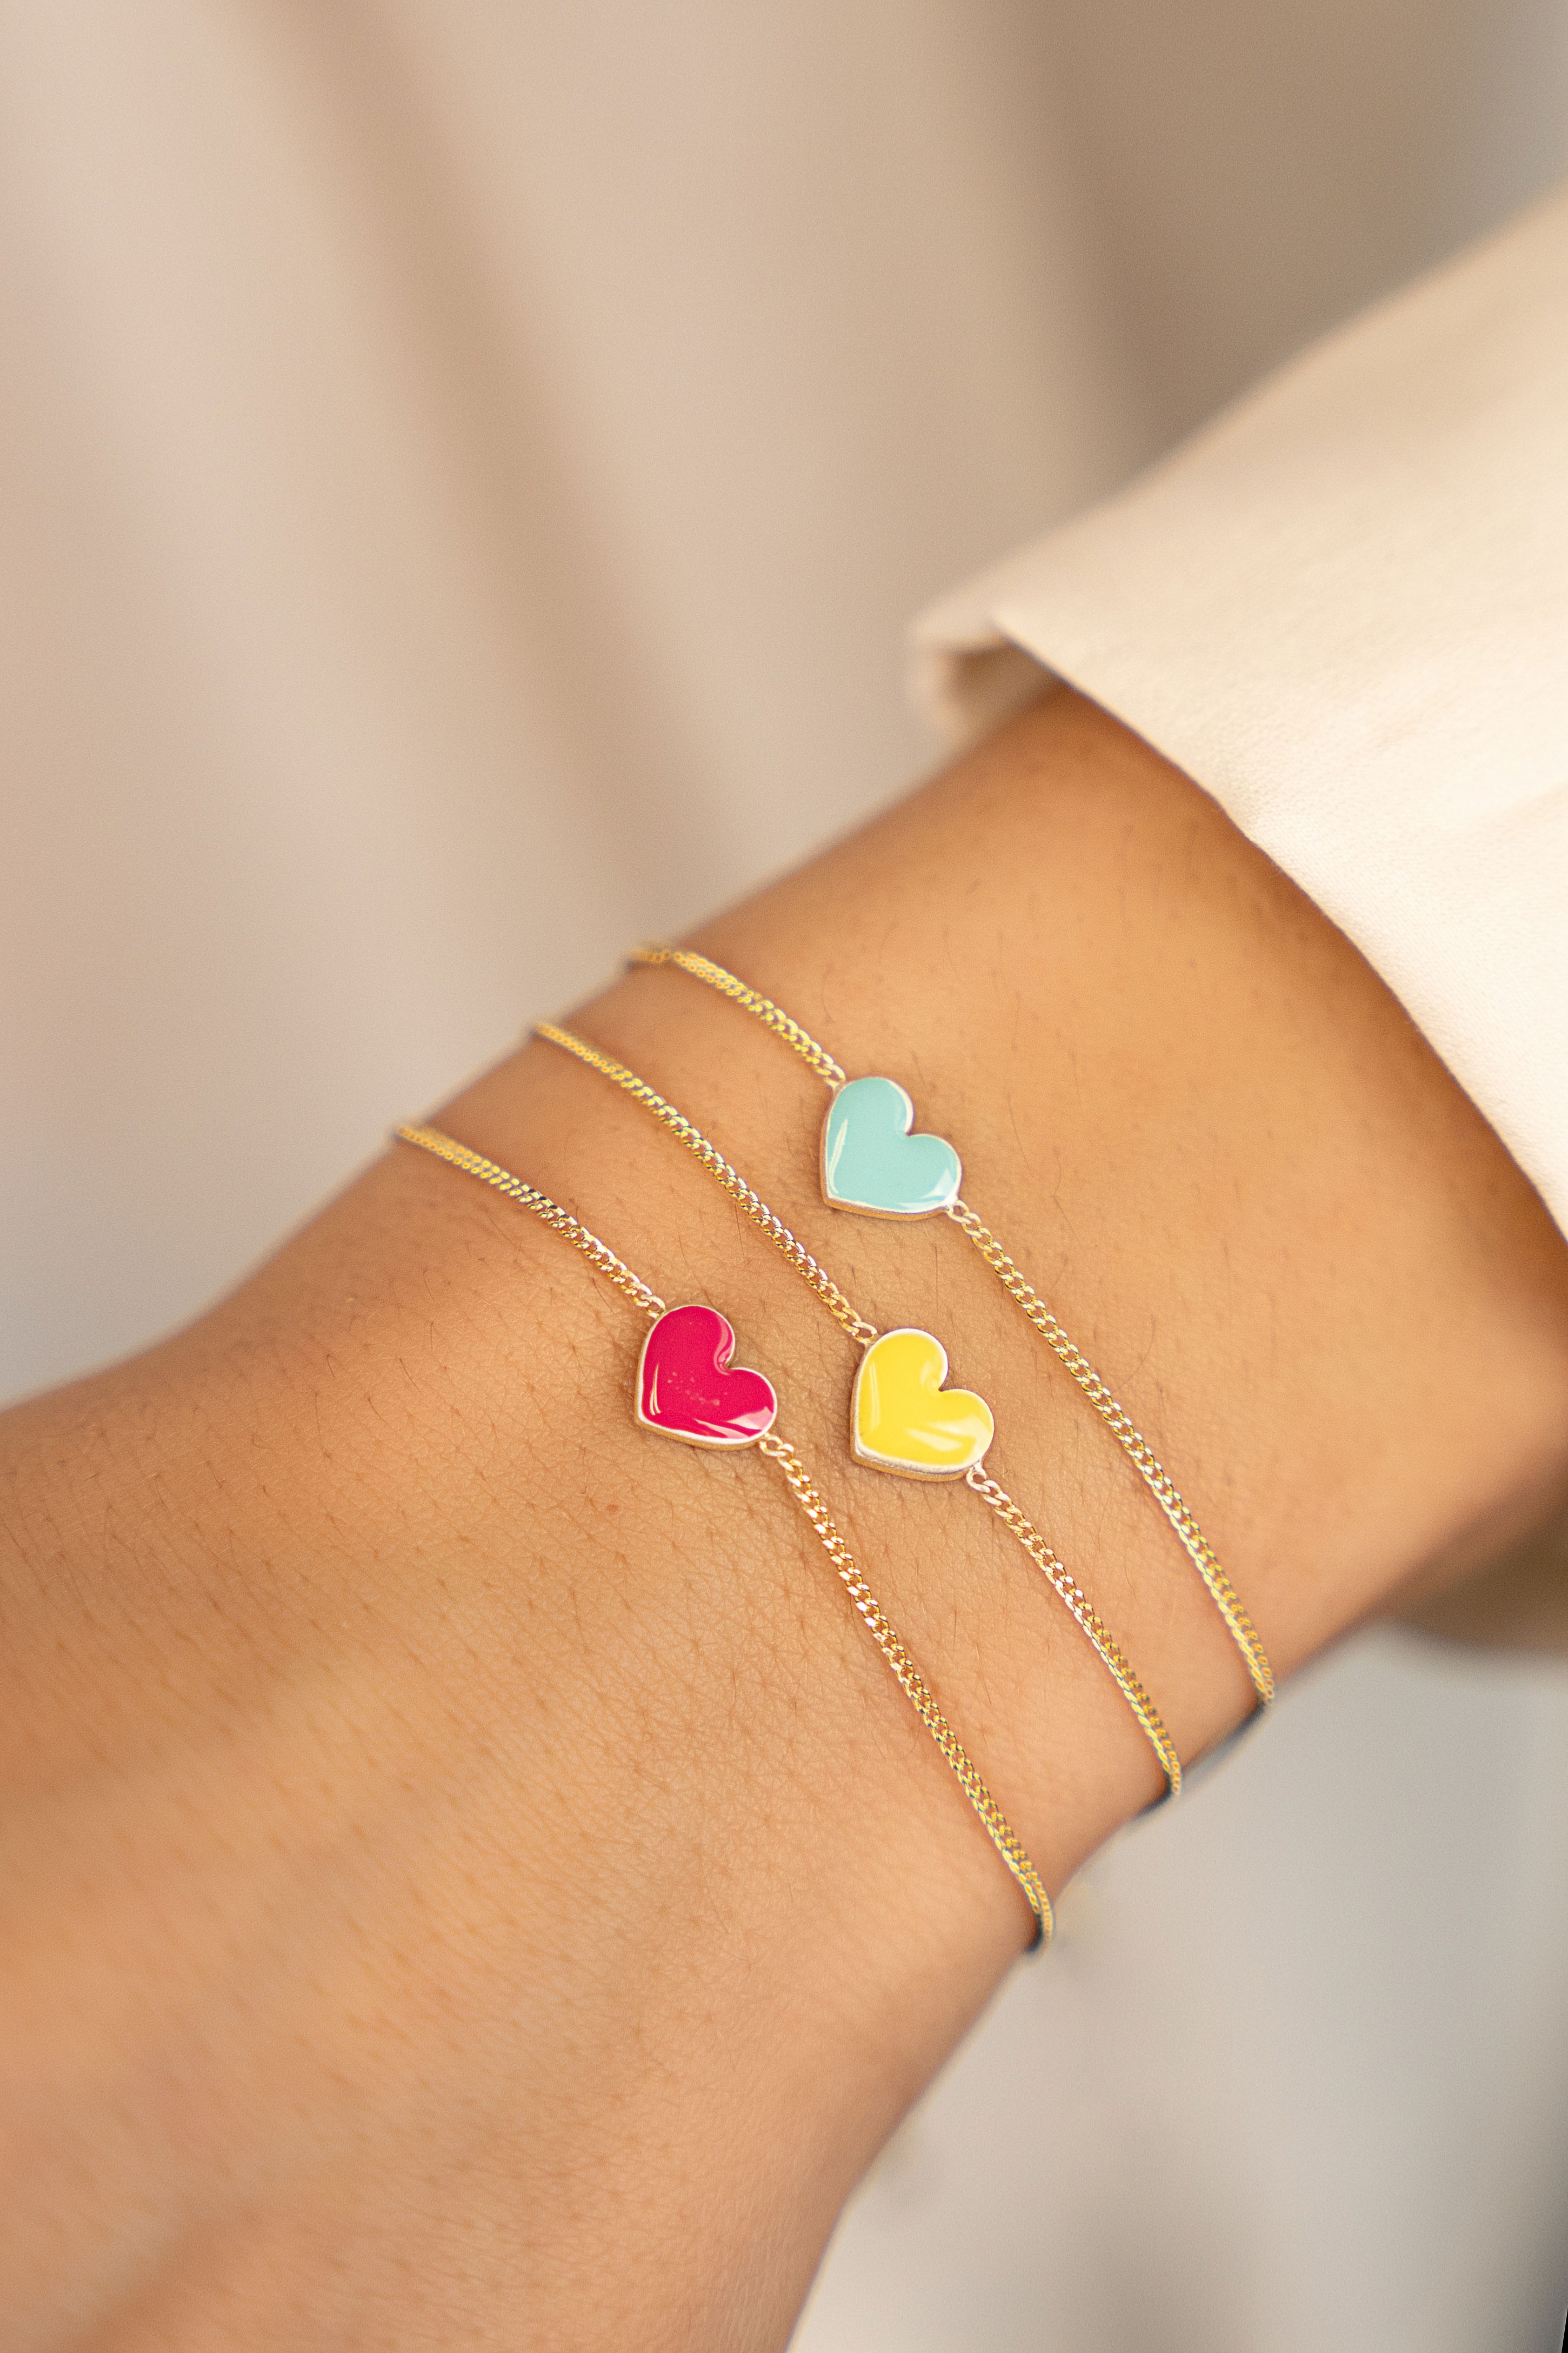 Symbol bracelet heart enamel turquoiselott-theme.productDescriptionPage.SEO.byTheBrand